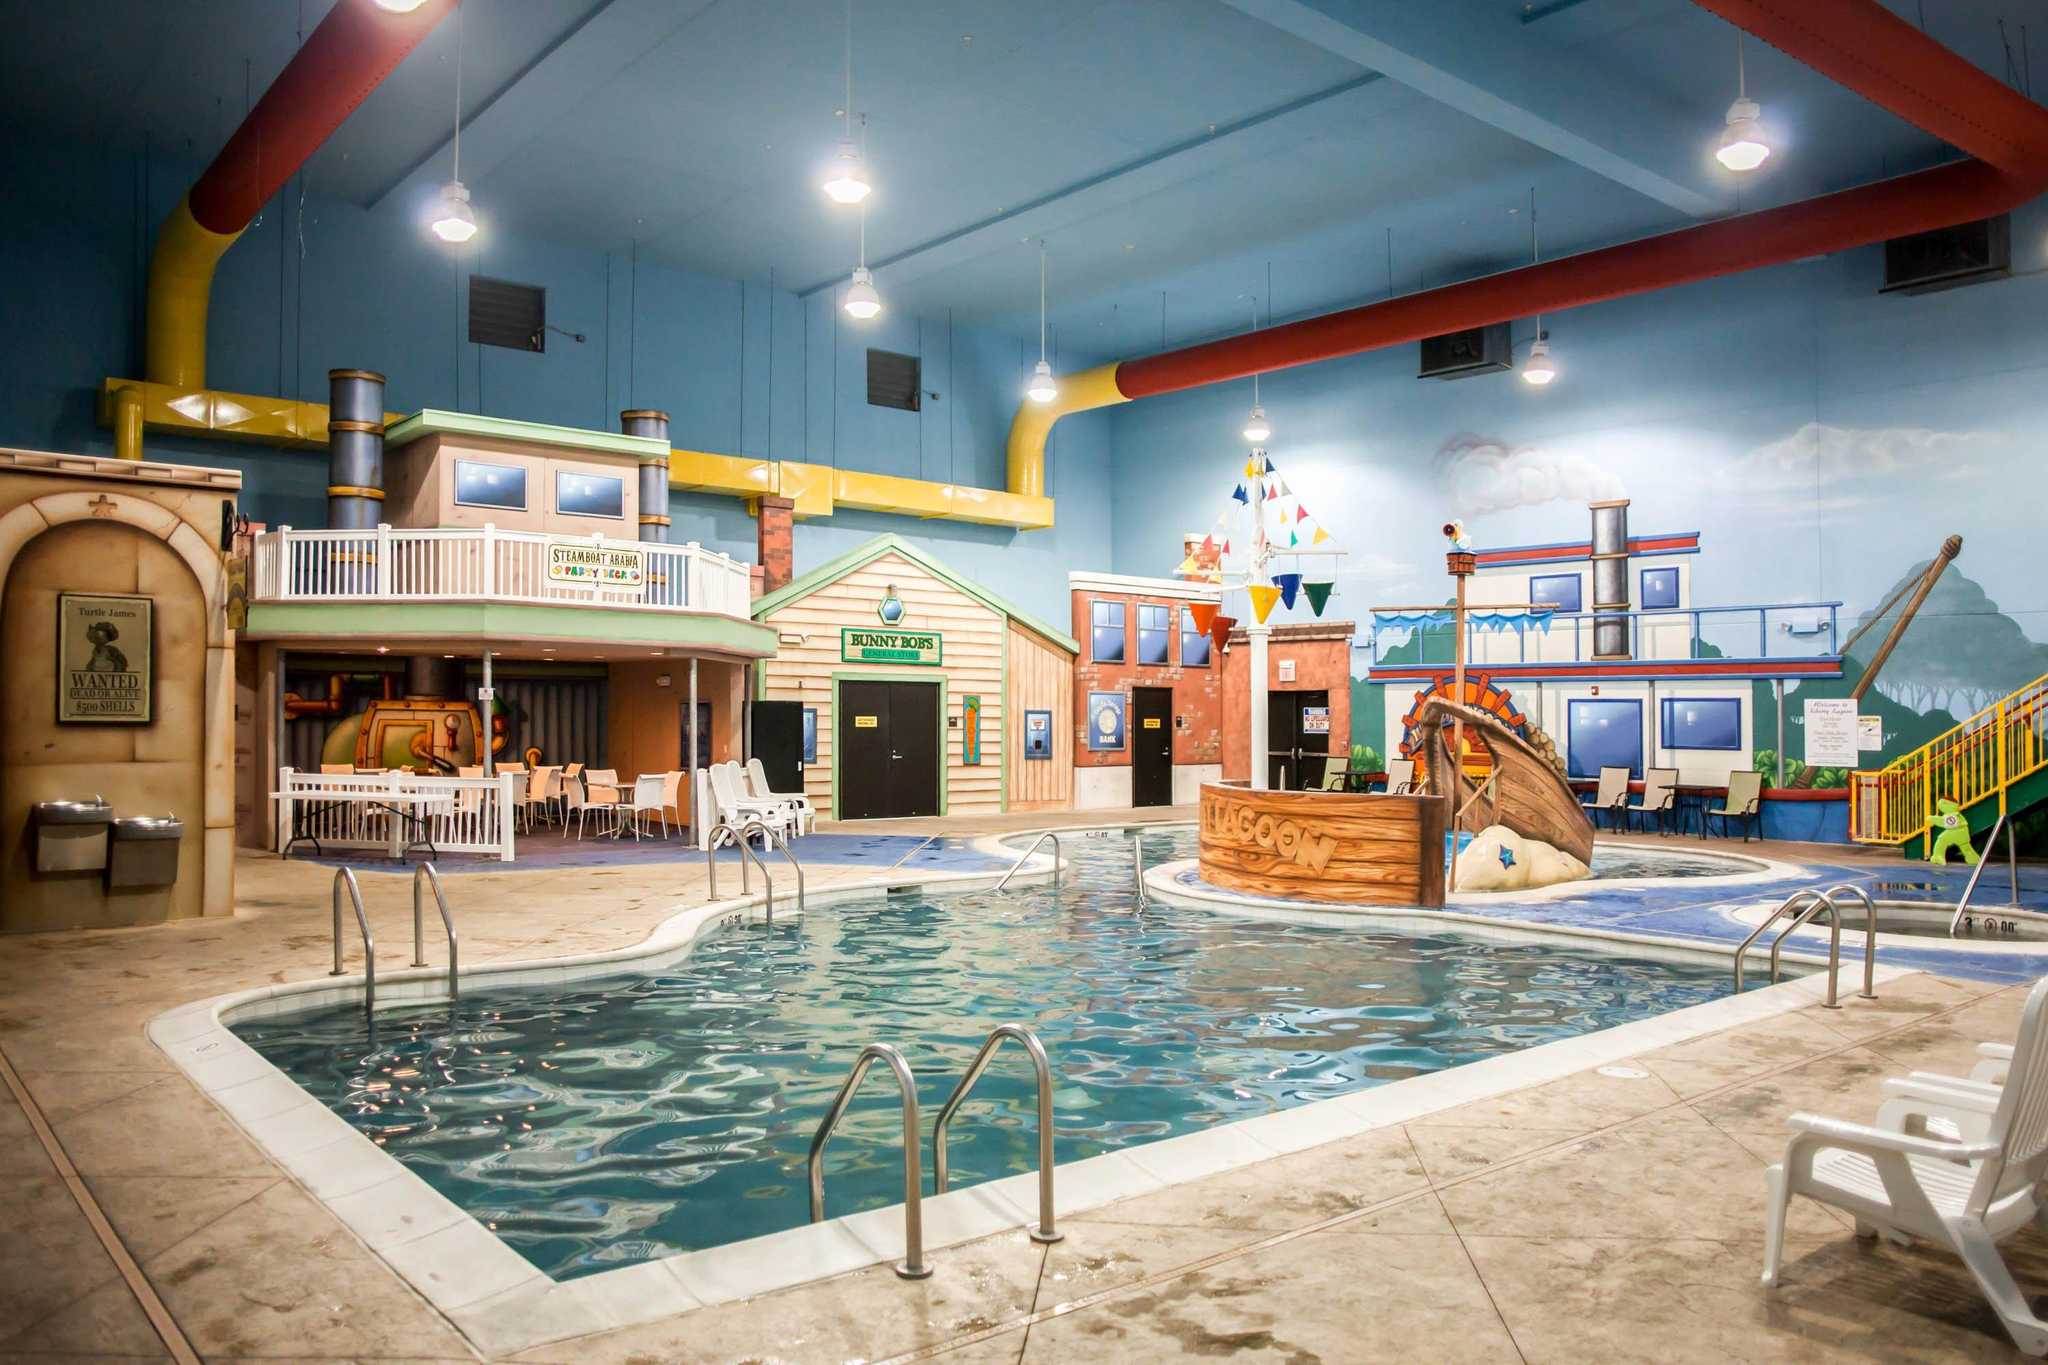 Sleep Inn & Suites Indoor Waterpark, Liberty Missouri (MO ...